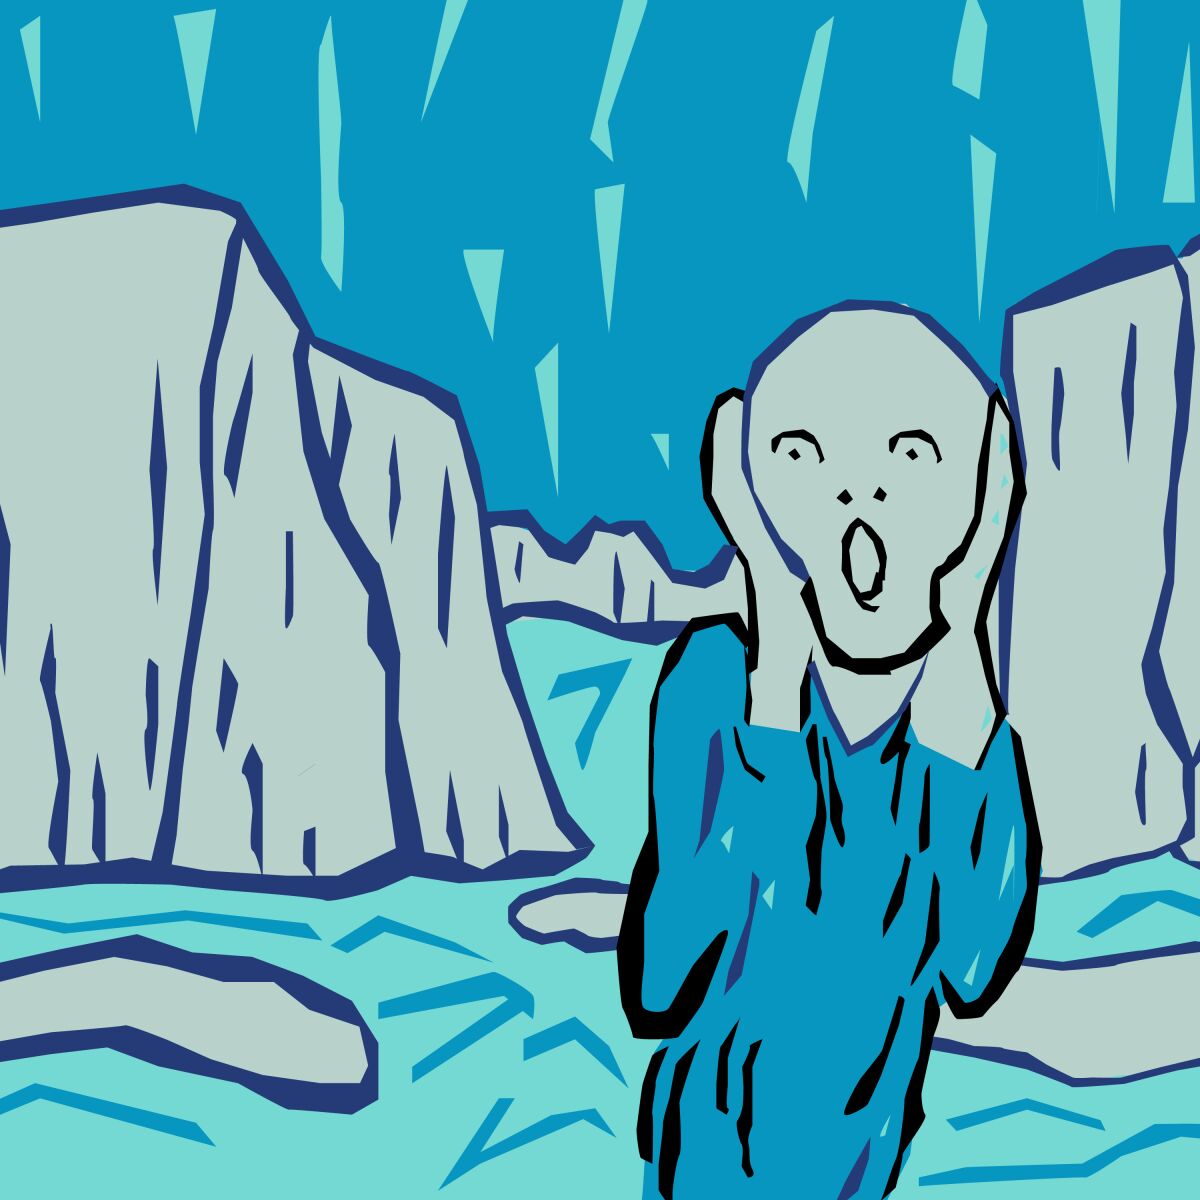 Glaciar Scream illustration